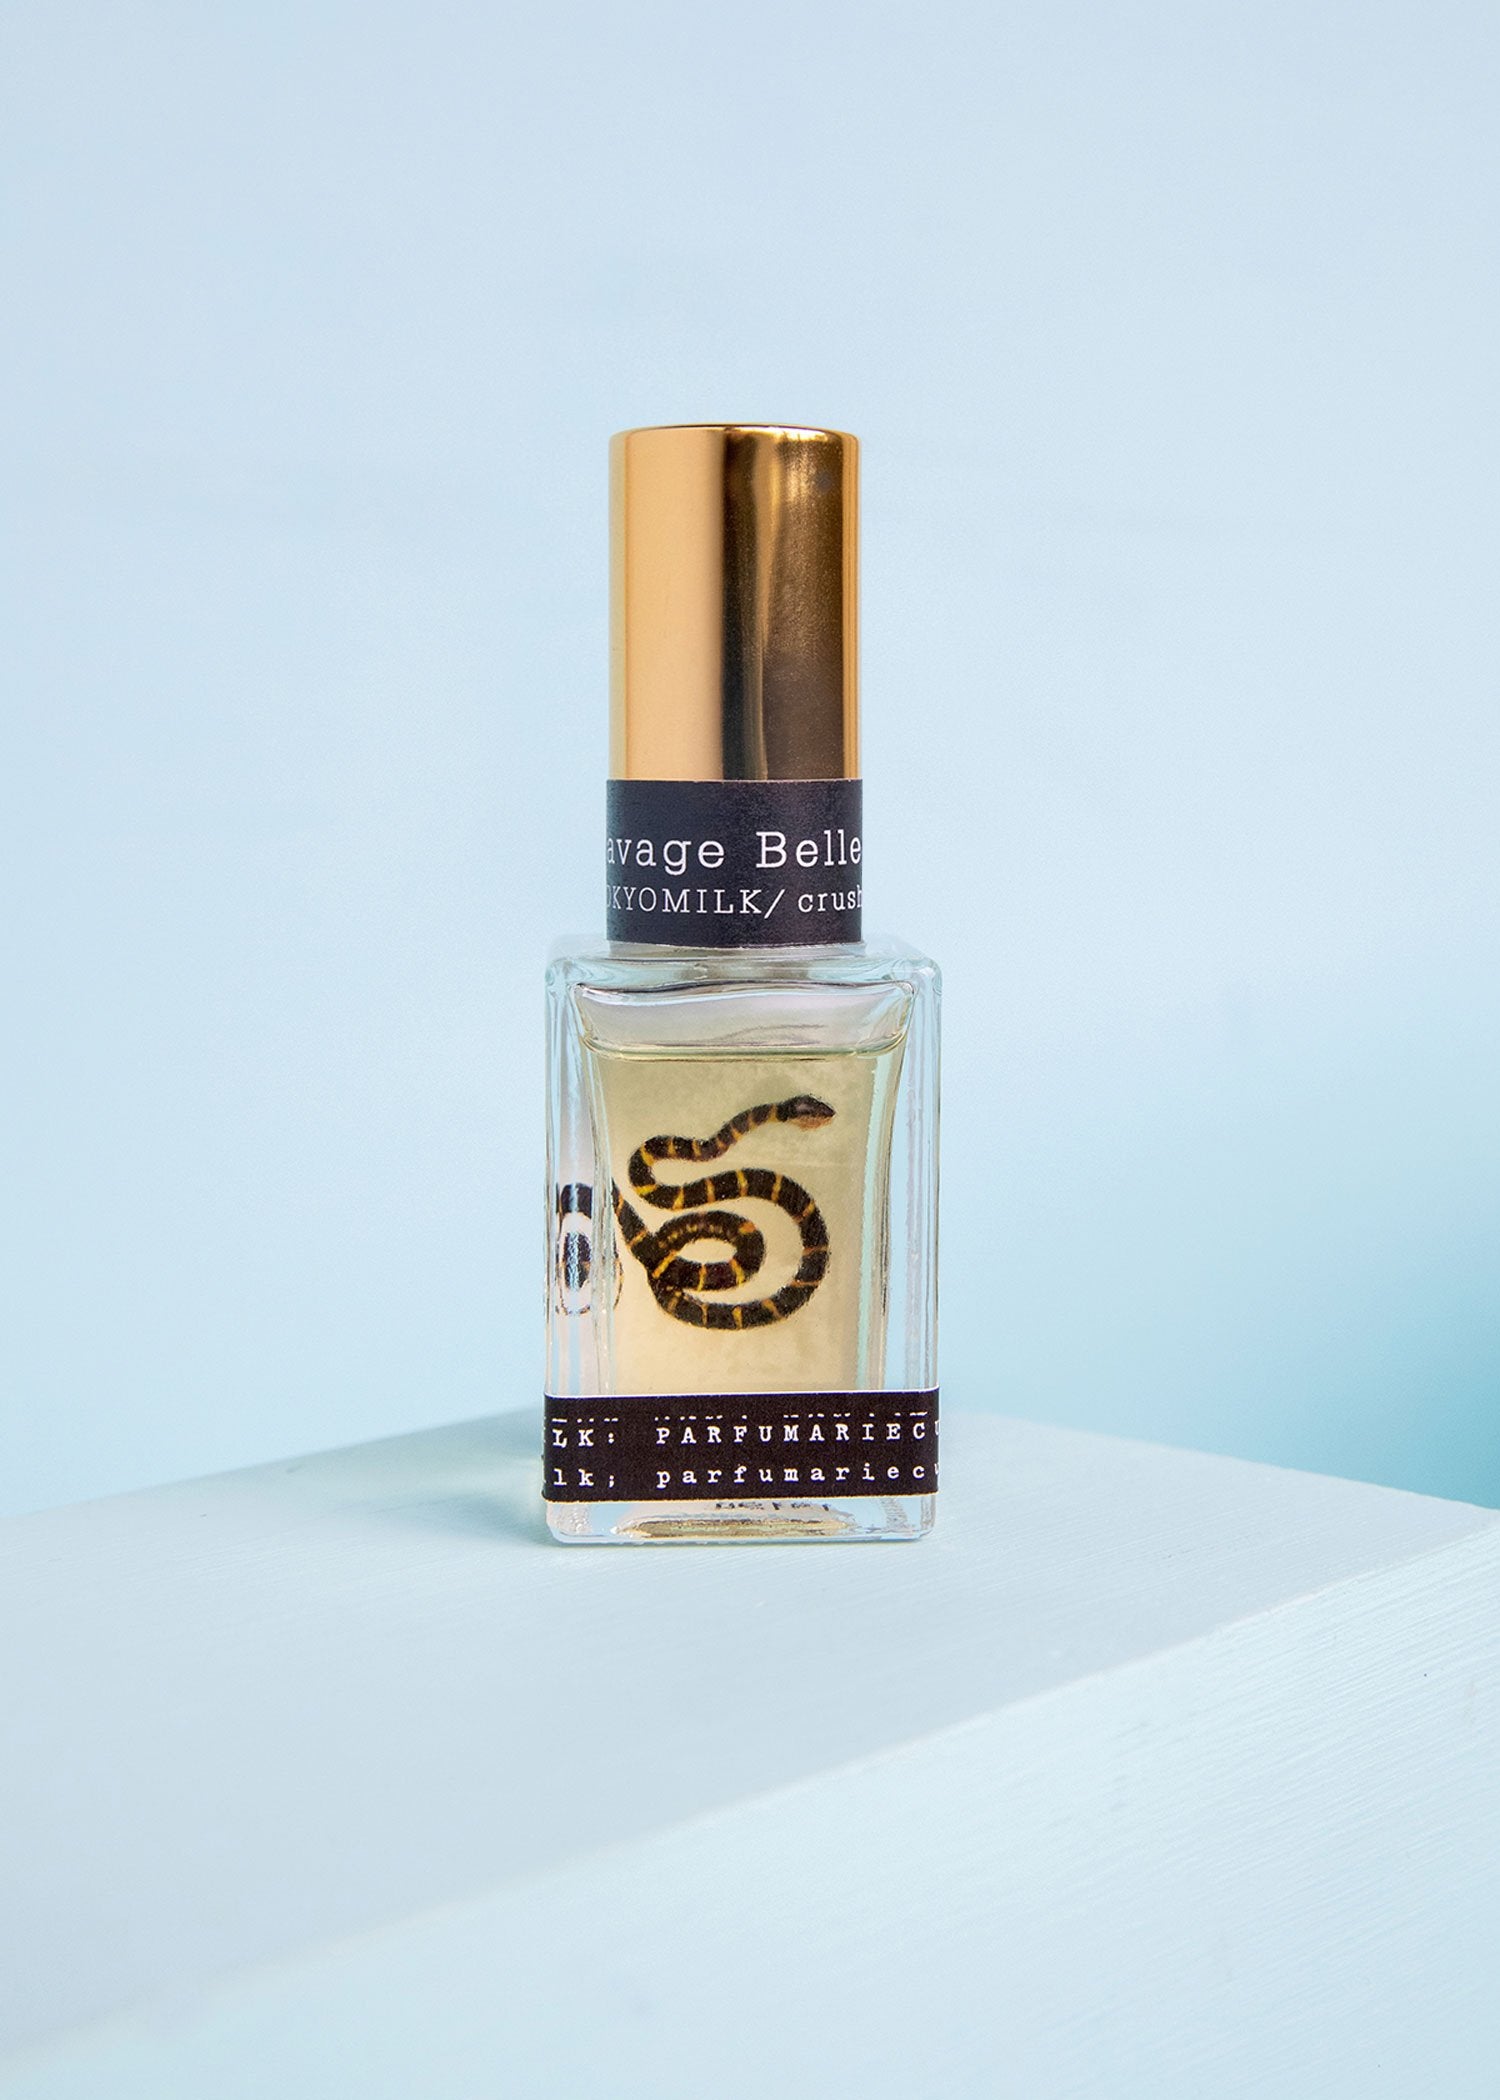 TokyoMilk Savage Belle No. 68 Perfume